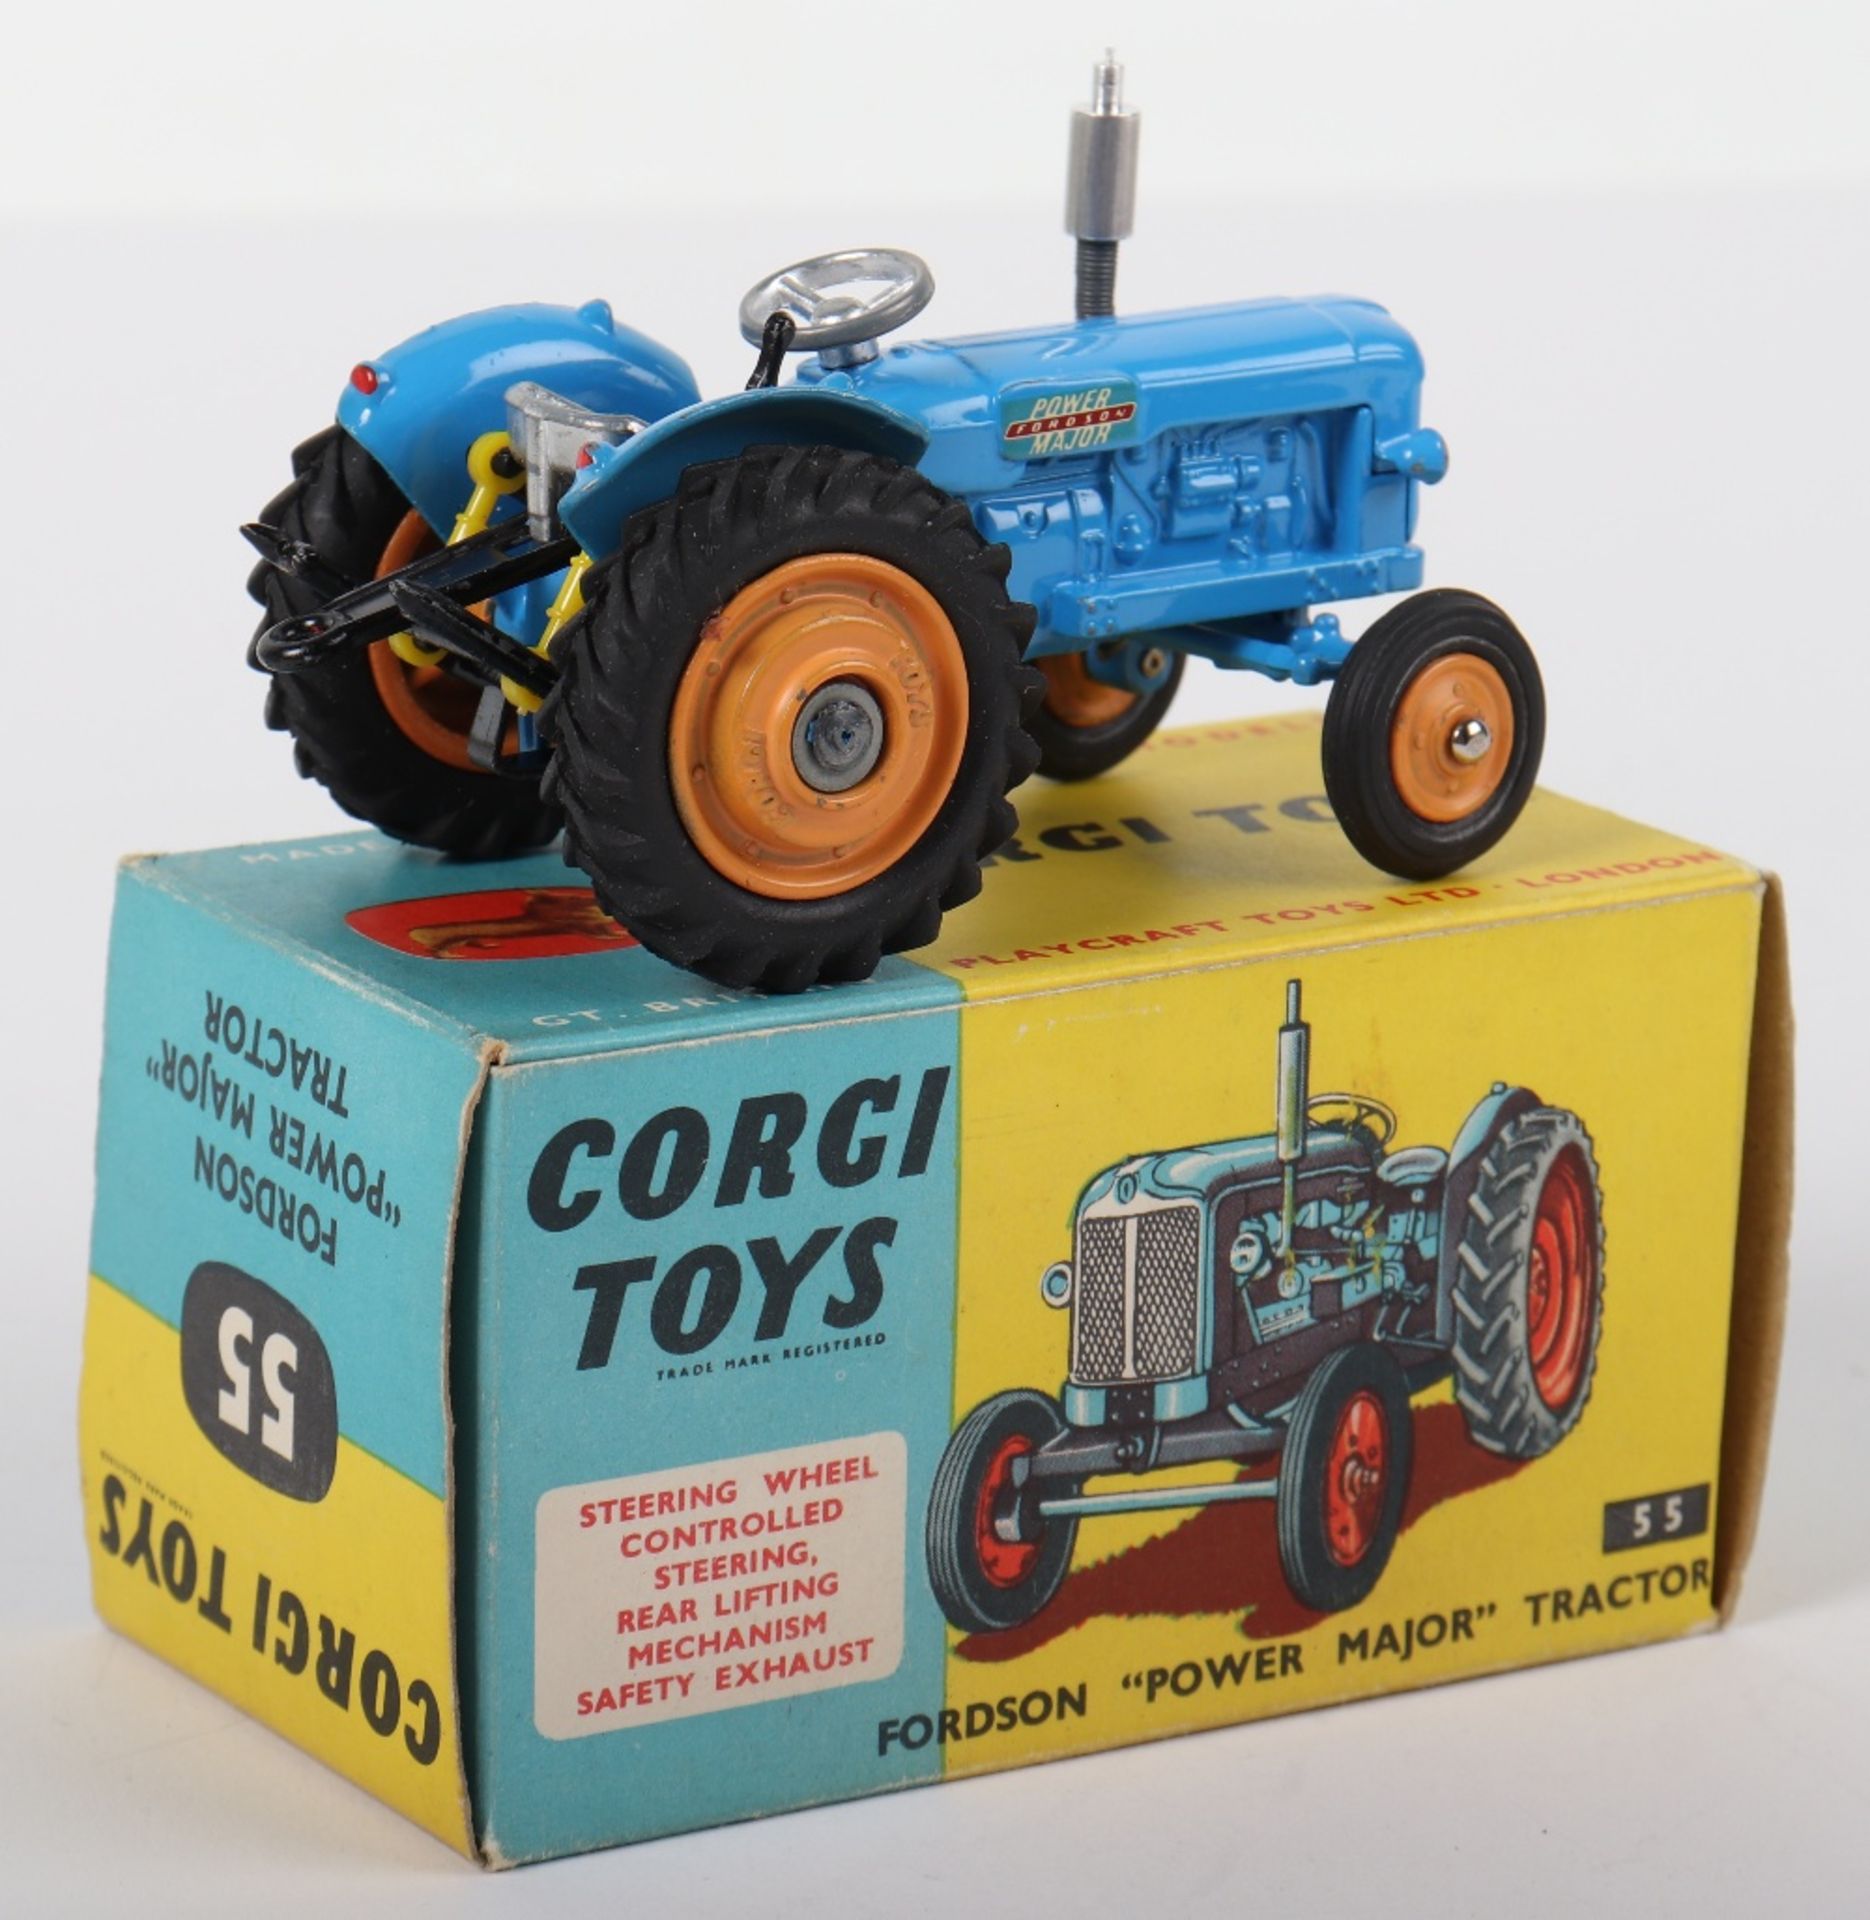 Boxed Corgi Toys 55 Fordson “Power Major” Tractor - Image 3 of 3